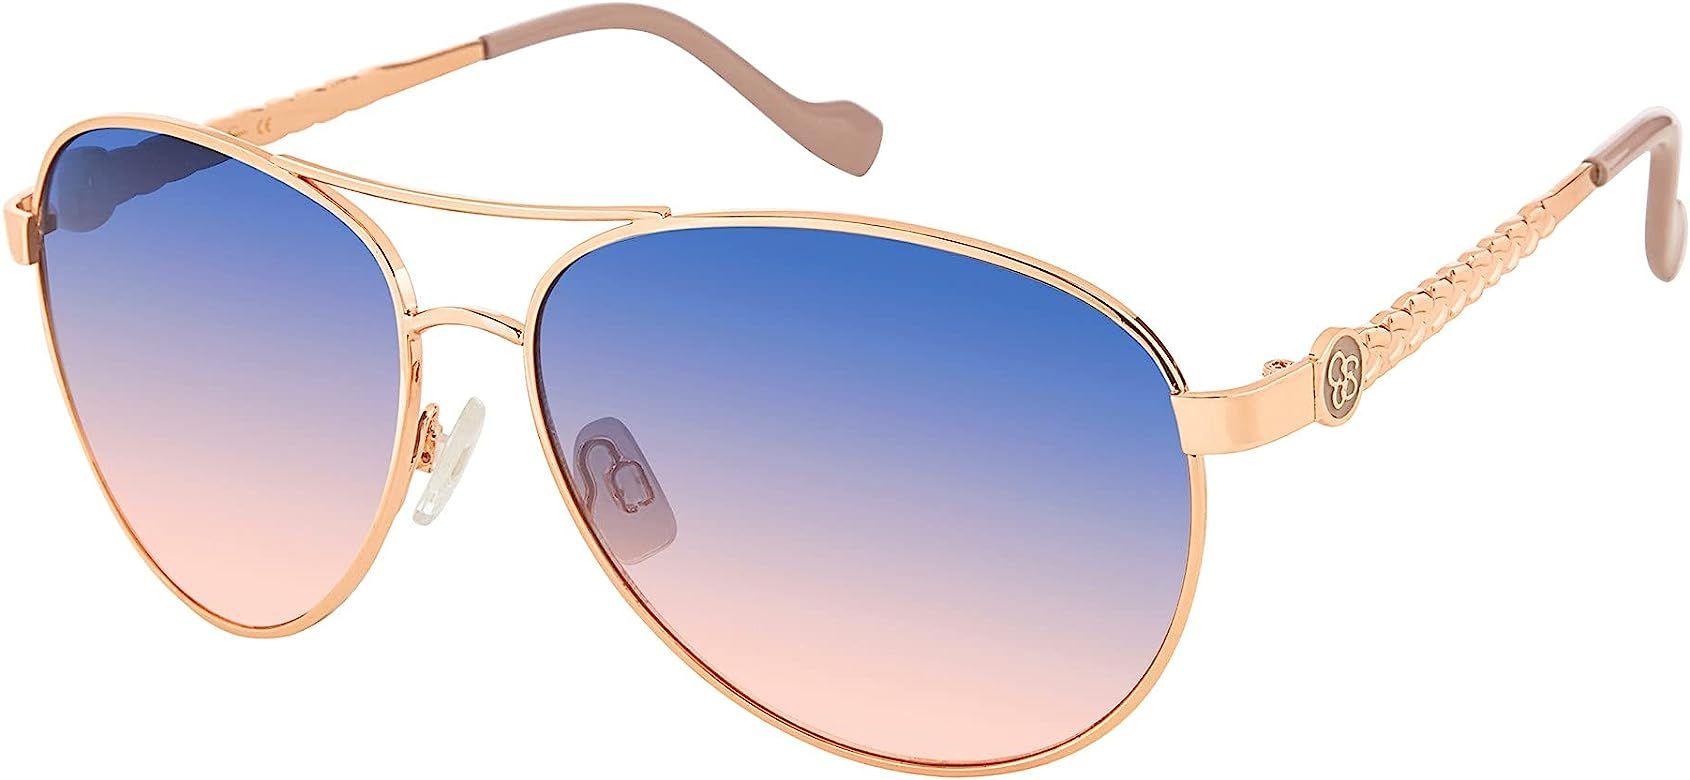 Jessica Simpson J5702 Stylish Metal UV Protective Aviator Sunglasses. Glam Gifts for Women, 59 mm | Amazon (US)